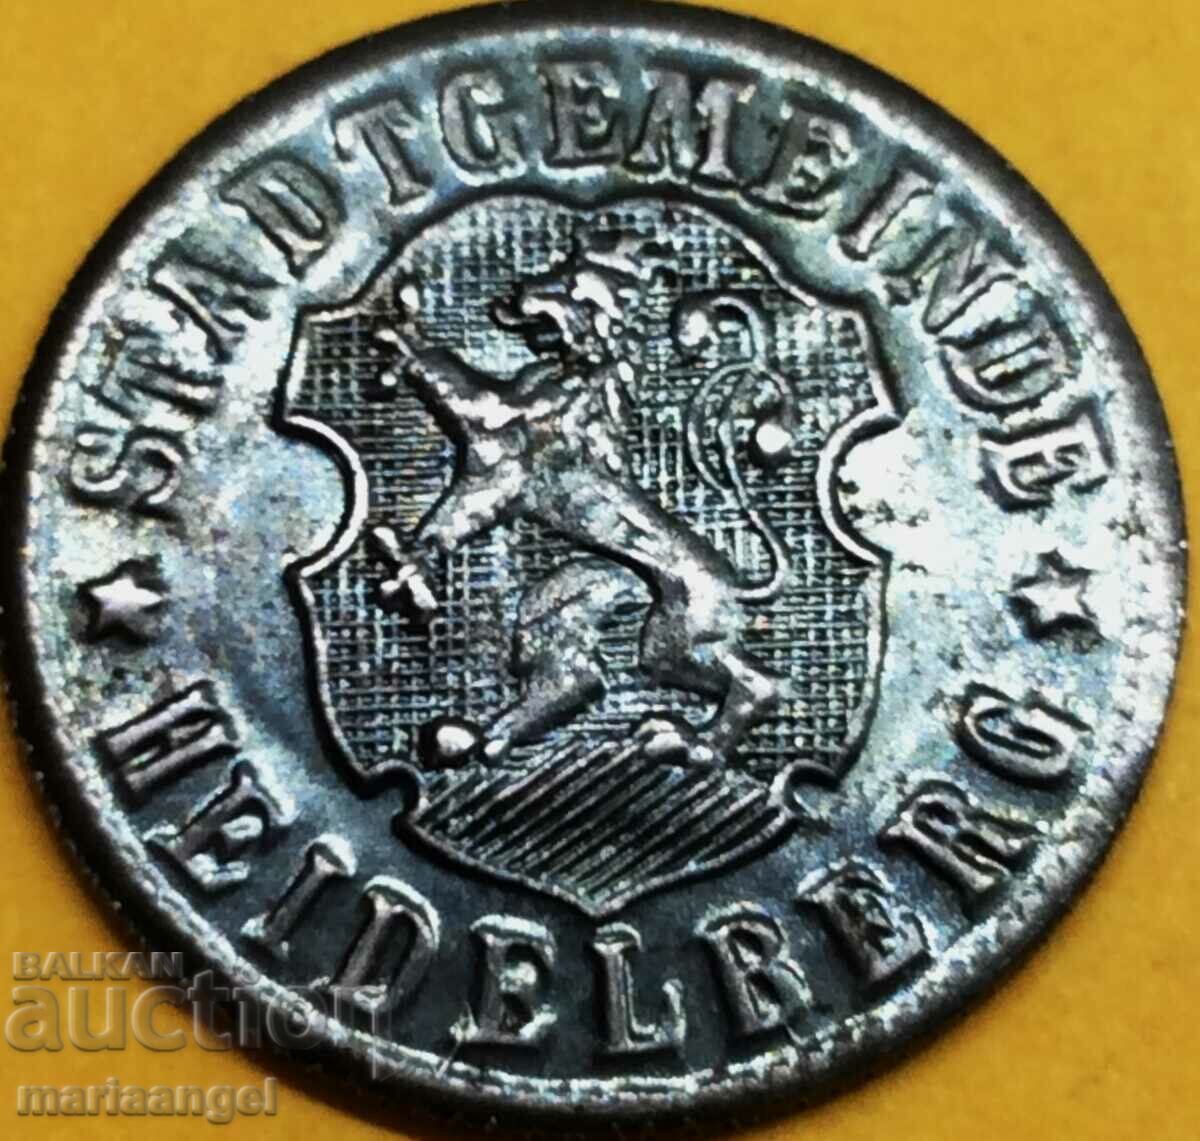 50 Pfennig 1917 Germany Heidelberg Notgeld (WWI Money) 22mm